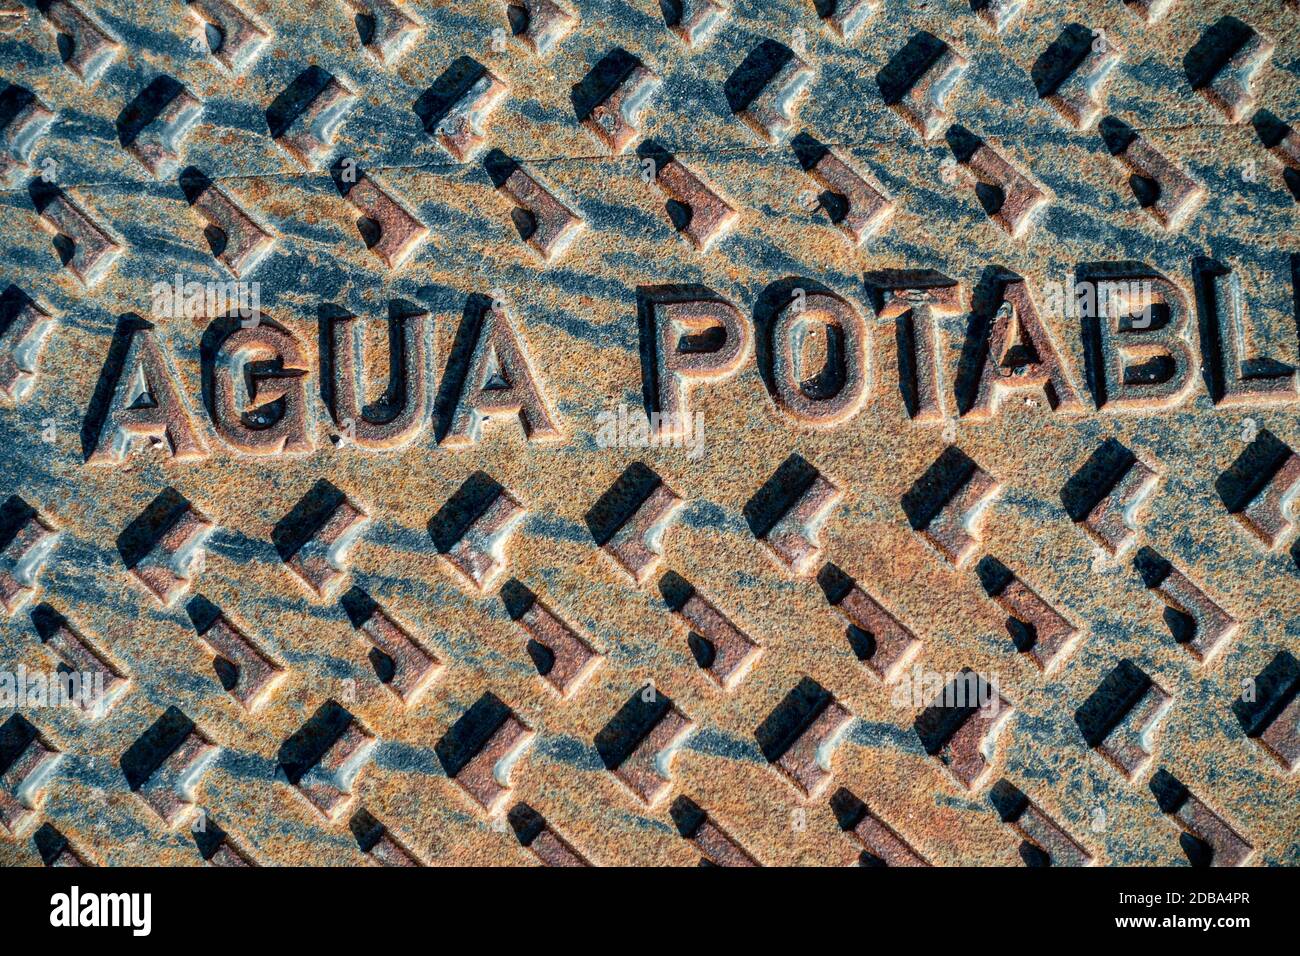 a water manhole cover on spanish urbanisation Stock Photo